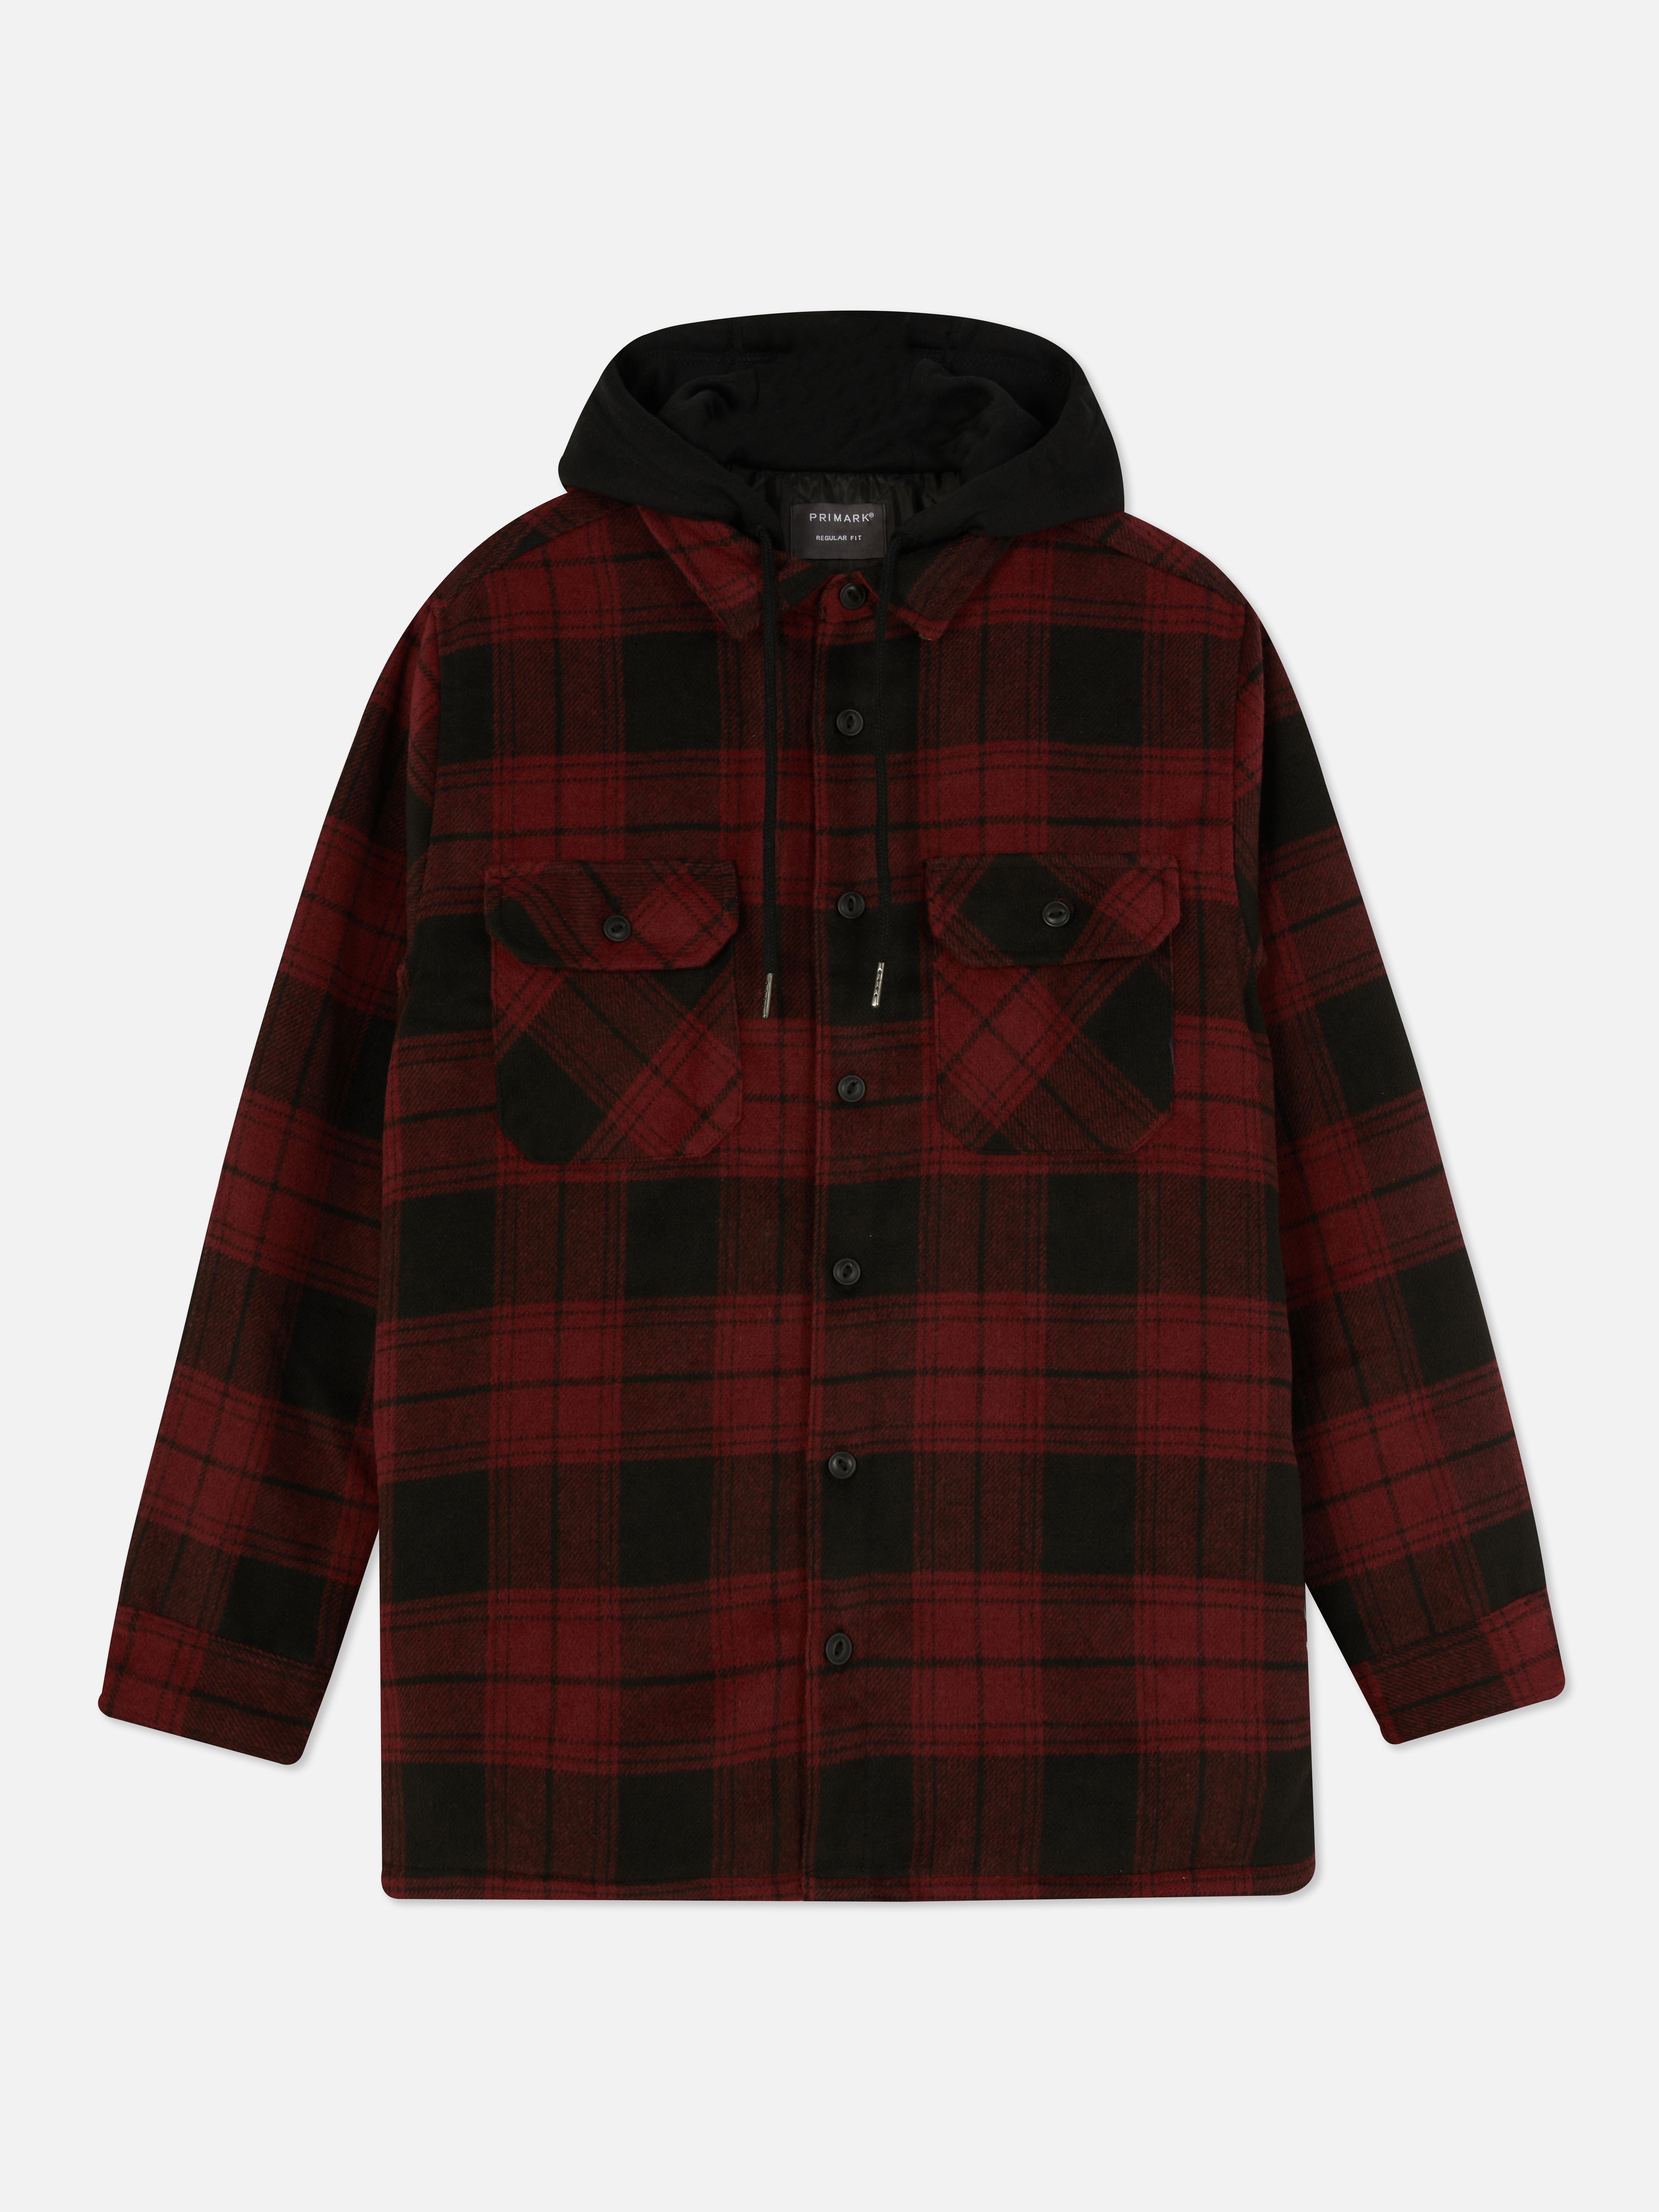 Hooded Tartan Overshirt | Men's Coats & Jackets | Men's Style | Our ...